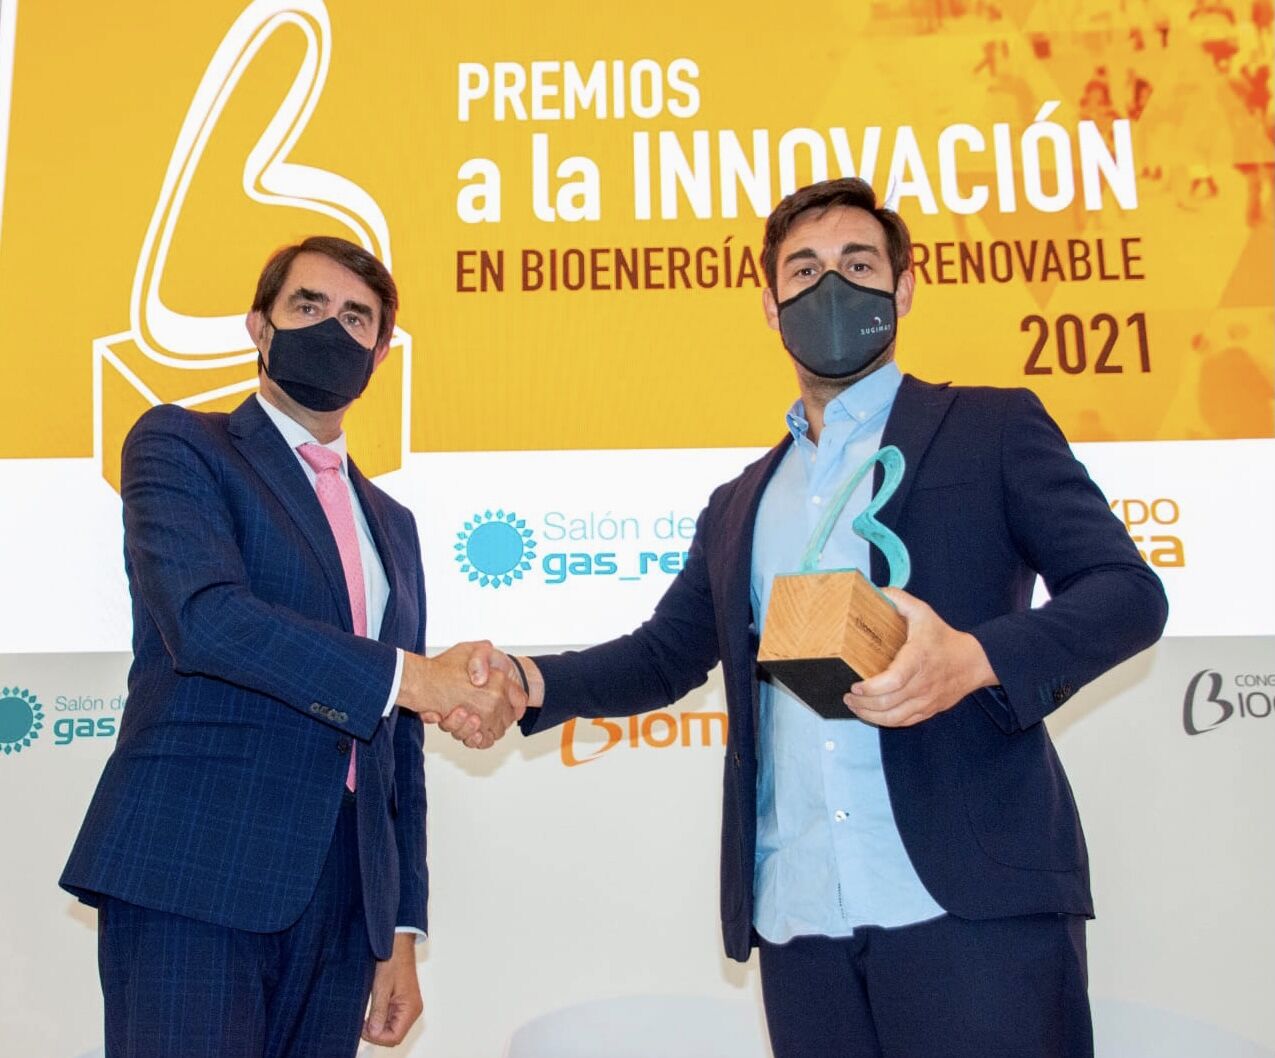 Premio a la innovacion en bioenergia 2021 a sugimat